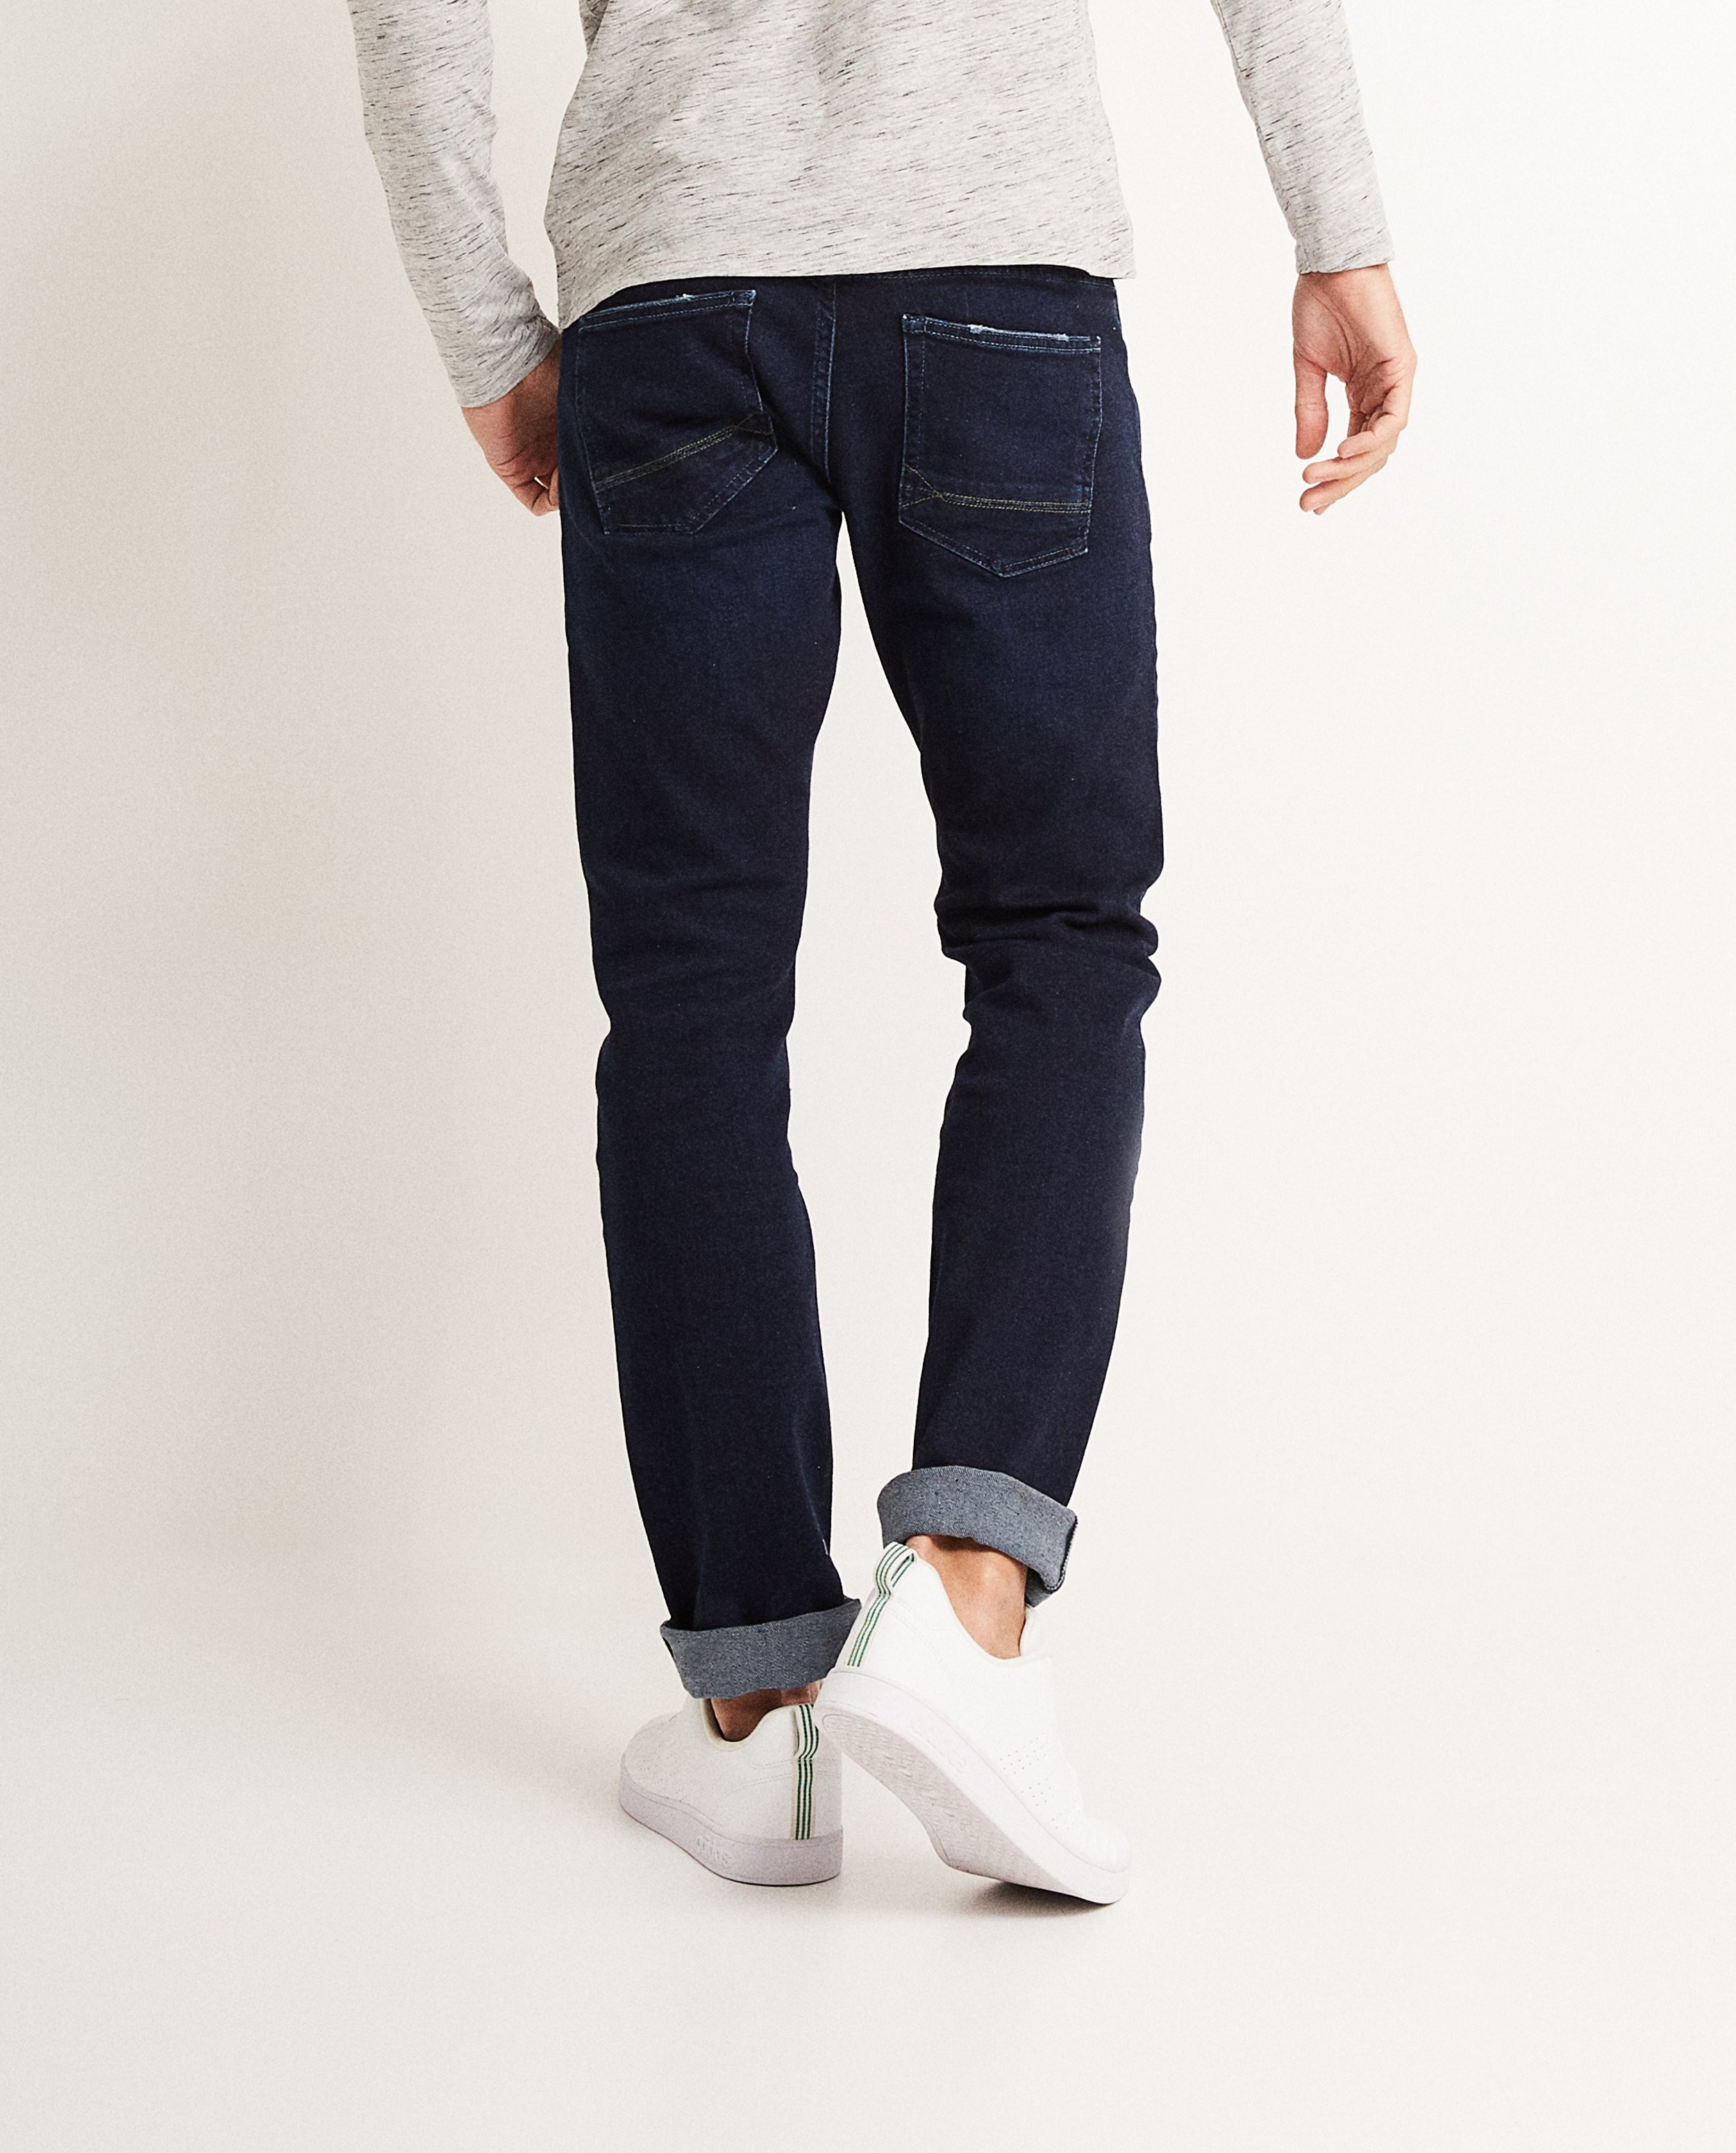 Jeans - Jeans bleu foncé I AM